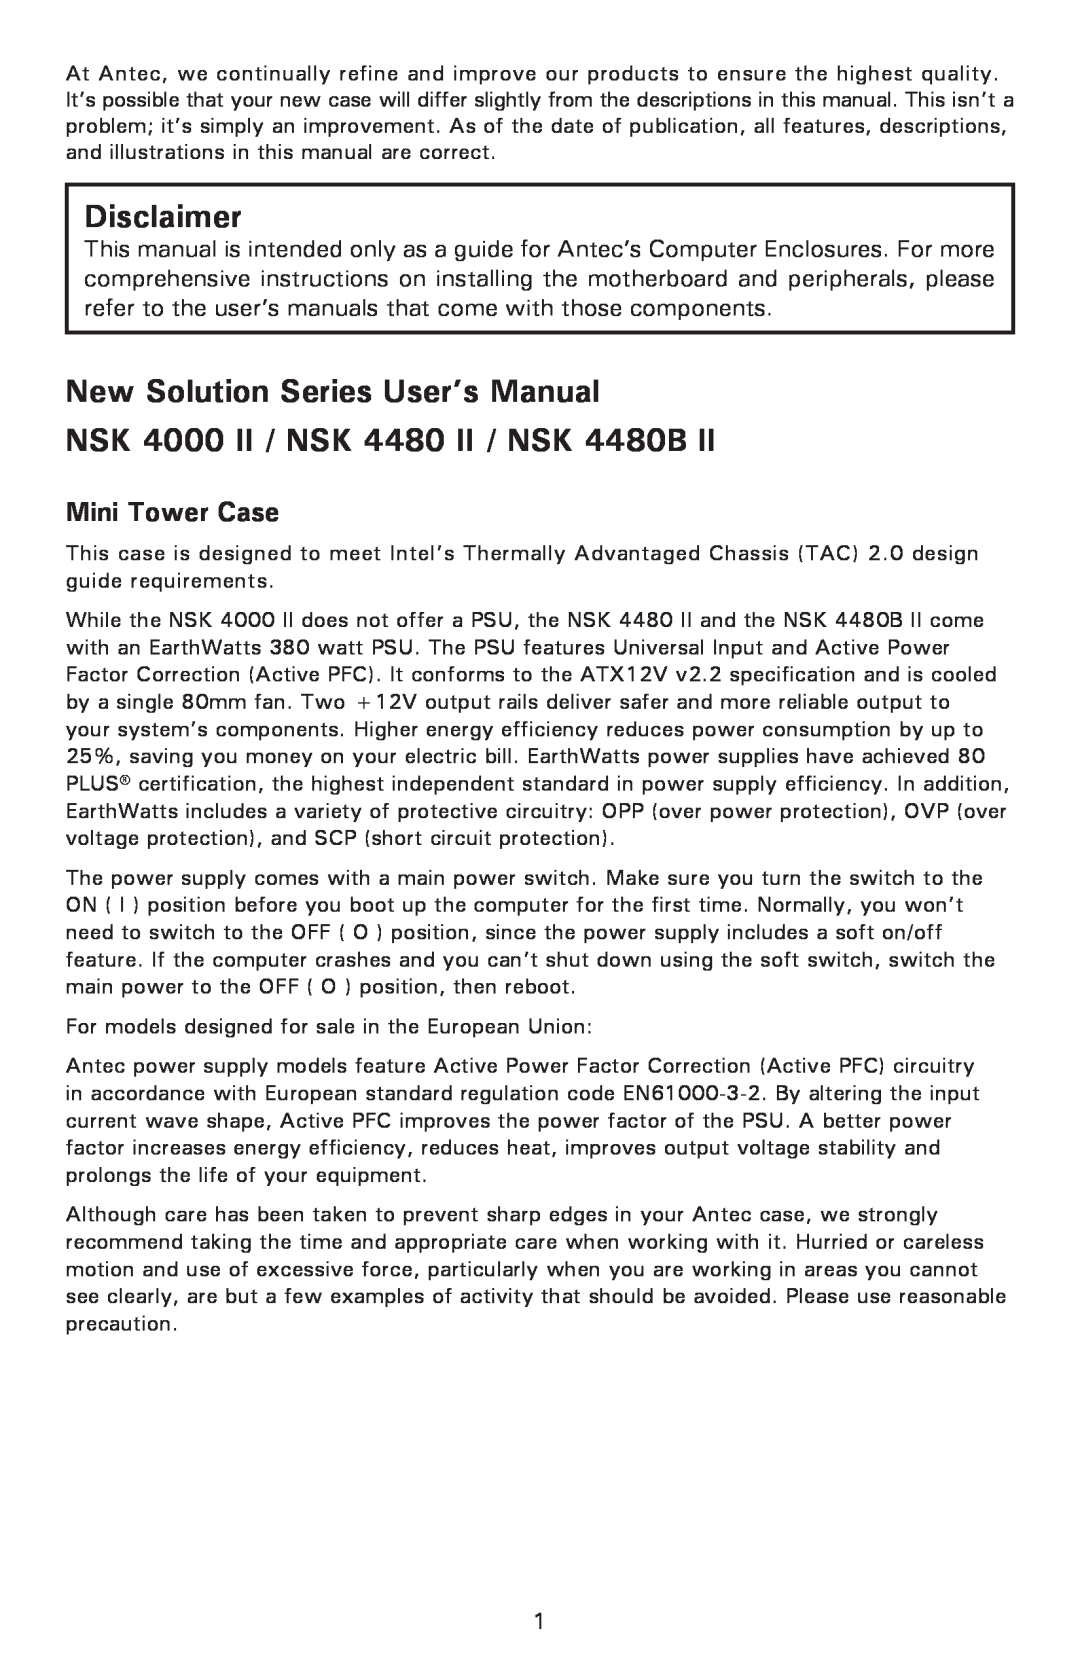 Antec user manual Mini Tower Case, Disclaimer, New Solution Series User’s Manual, NSK 4000 II / NSK 4480 II / NSK 4480B 